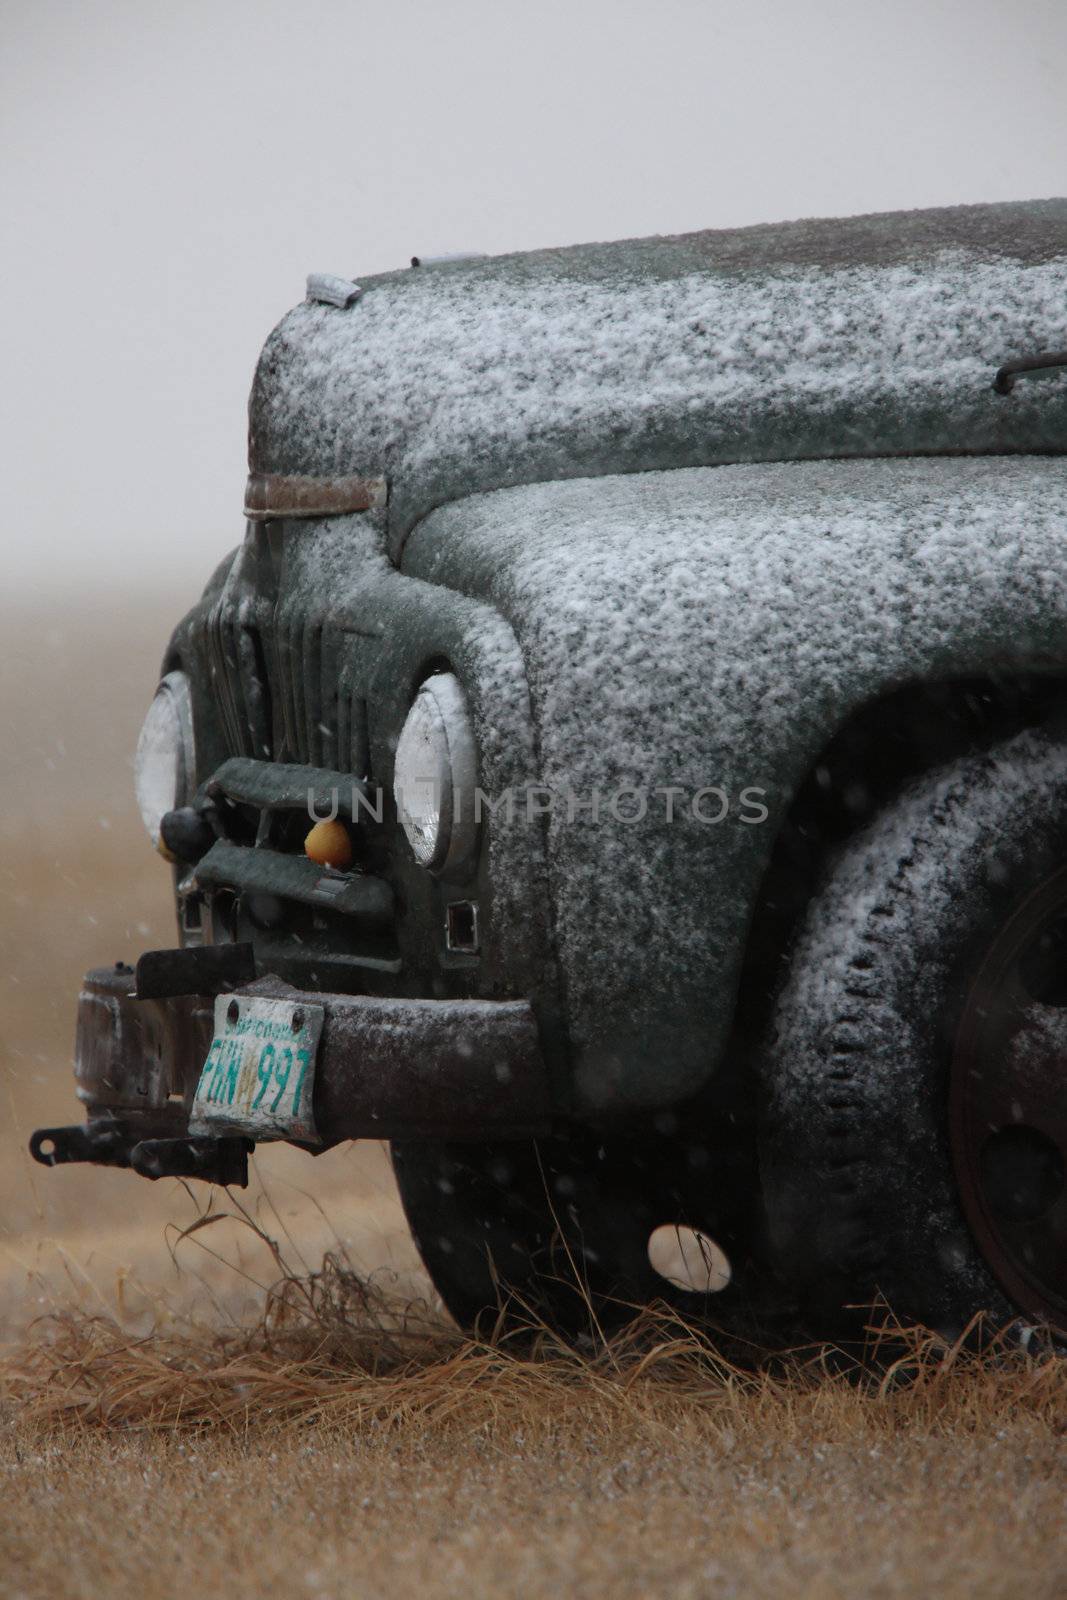 Old Vintage Truck in Winter Storm Saskatchewan by pictureguy